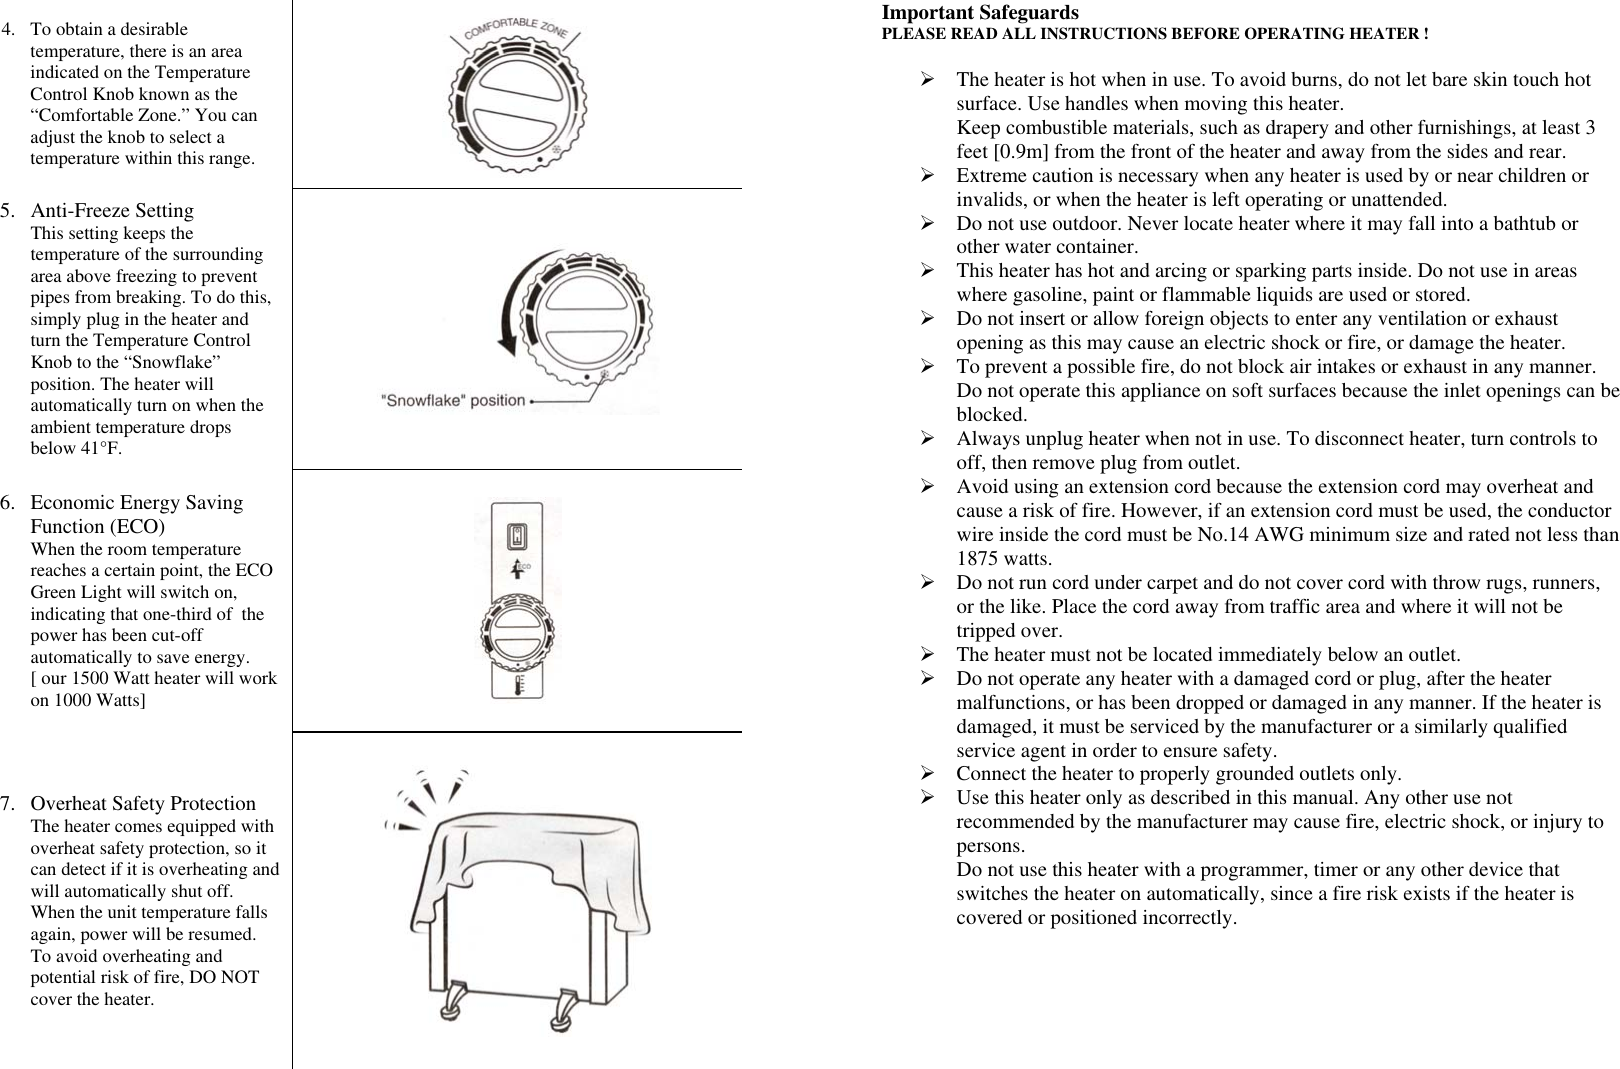 Page 4 of 5 - Soleus-Air Soleus-Air-Soleus-Air-Electric-Heater-Hgw-308-Users-Manual- MICATHERMIC PANEL HEATER  Soleus-air-soleus-air-electric-heater-hgw-308-users-manual